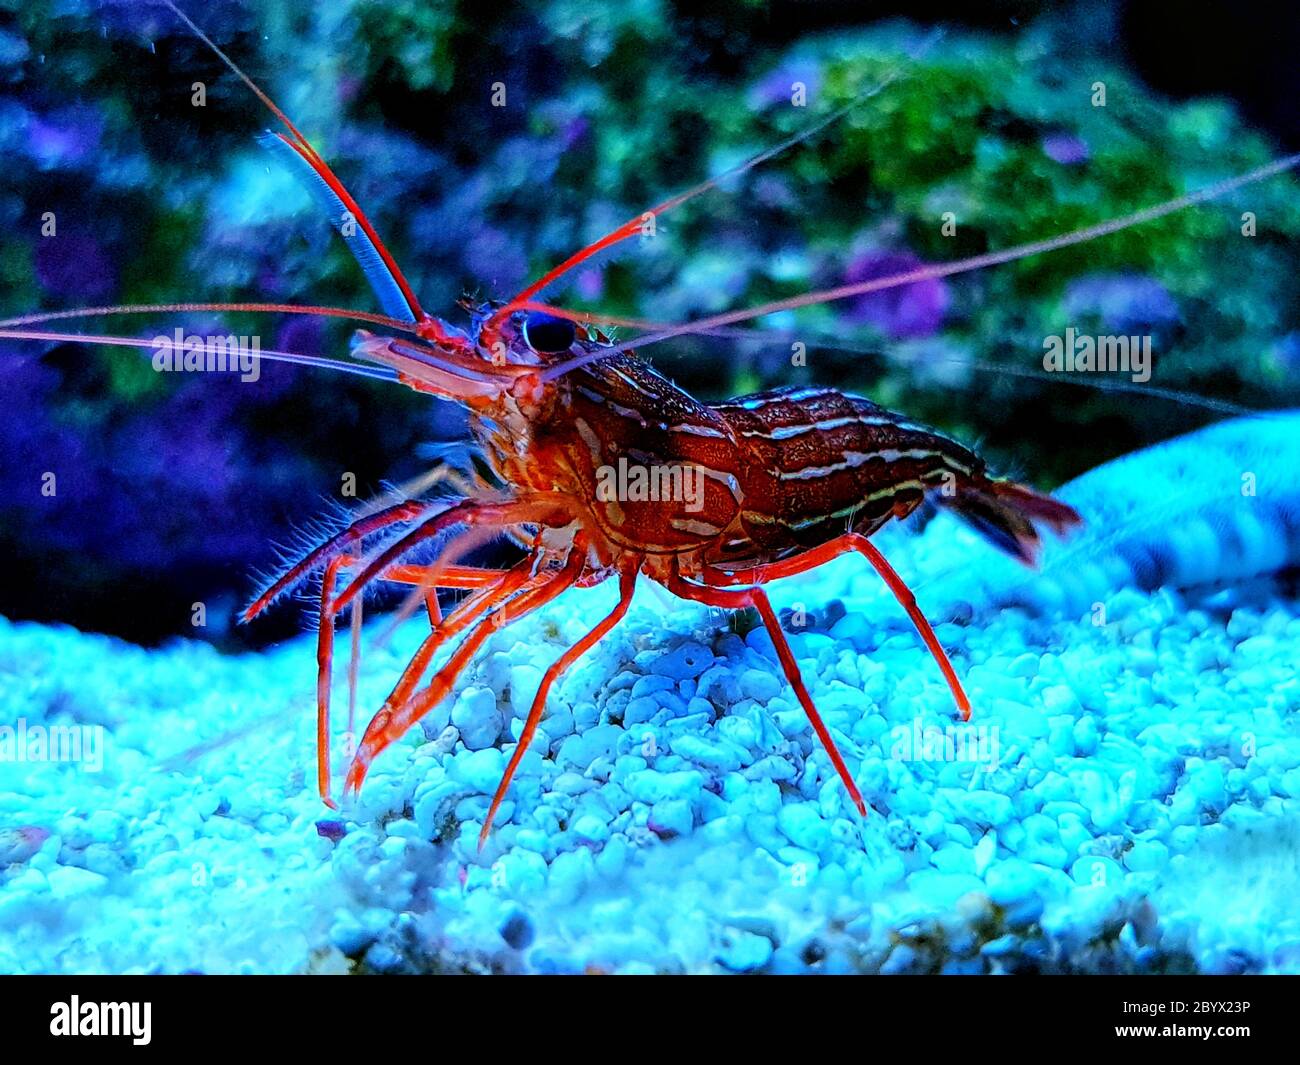 Mediterranean Peppermint Shrimp - Lysmata Seticuidata Stock Photo